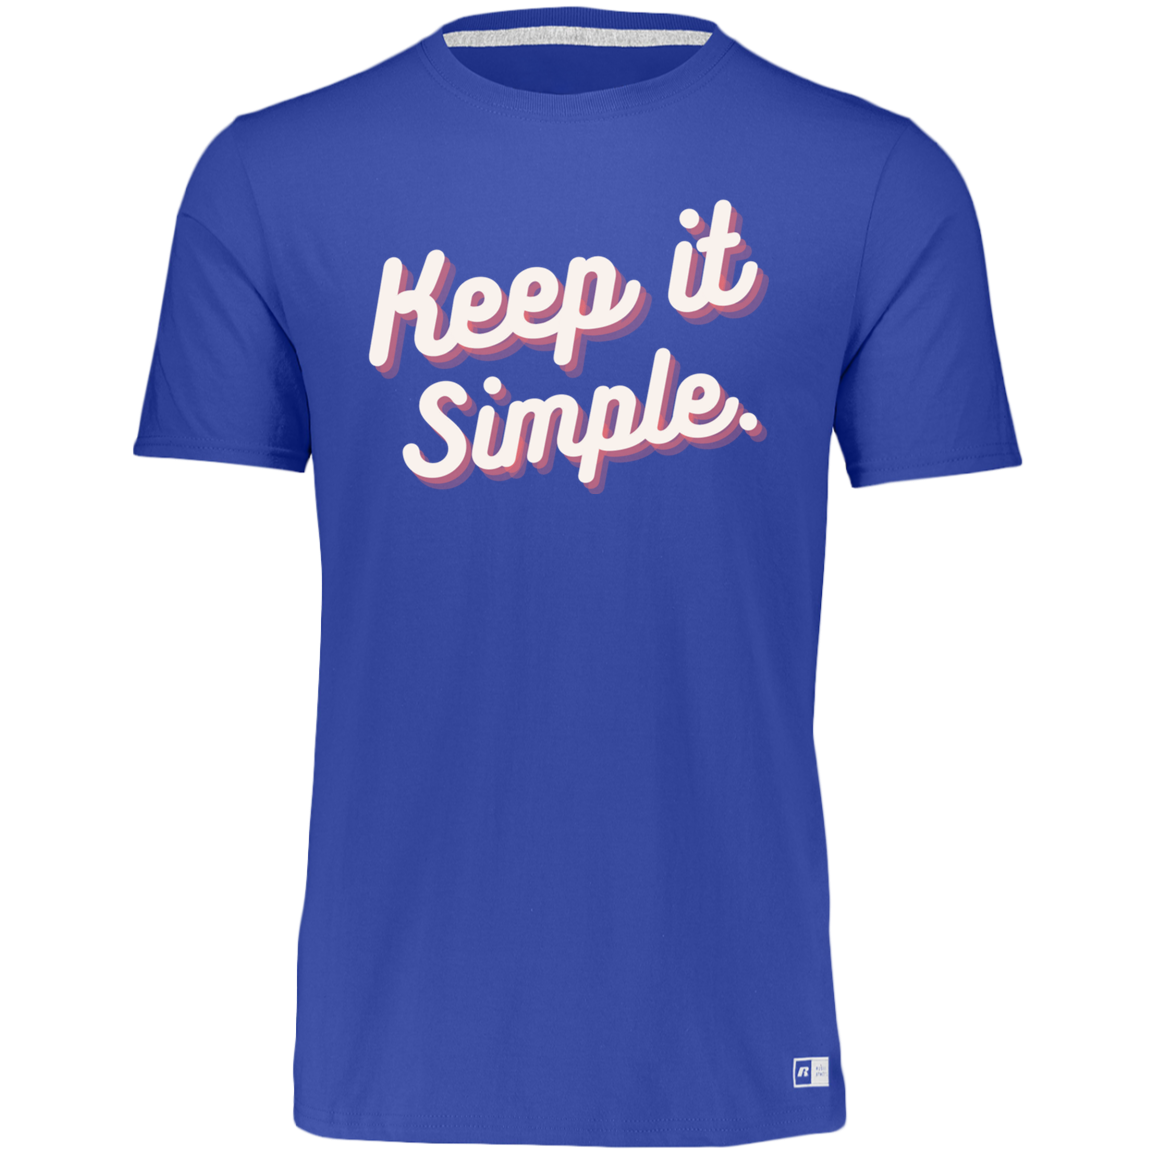 Unisex Dri-Power Tee--Keep it Simple, Encouraging Words Tee, Testing T-shirt